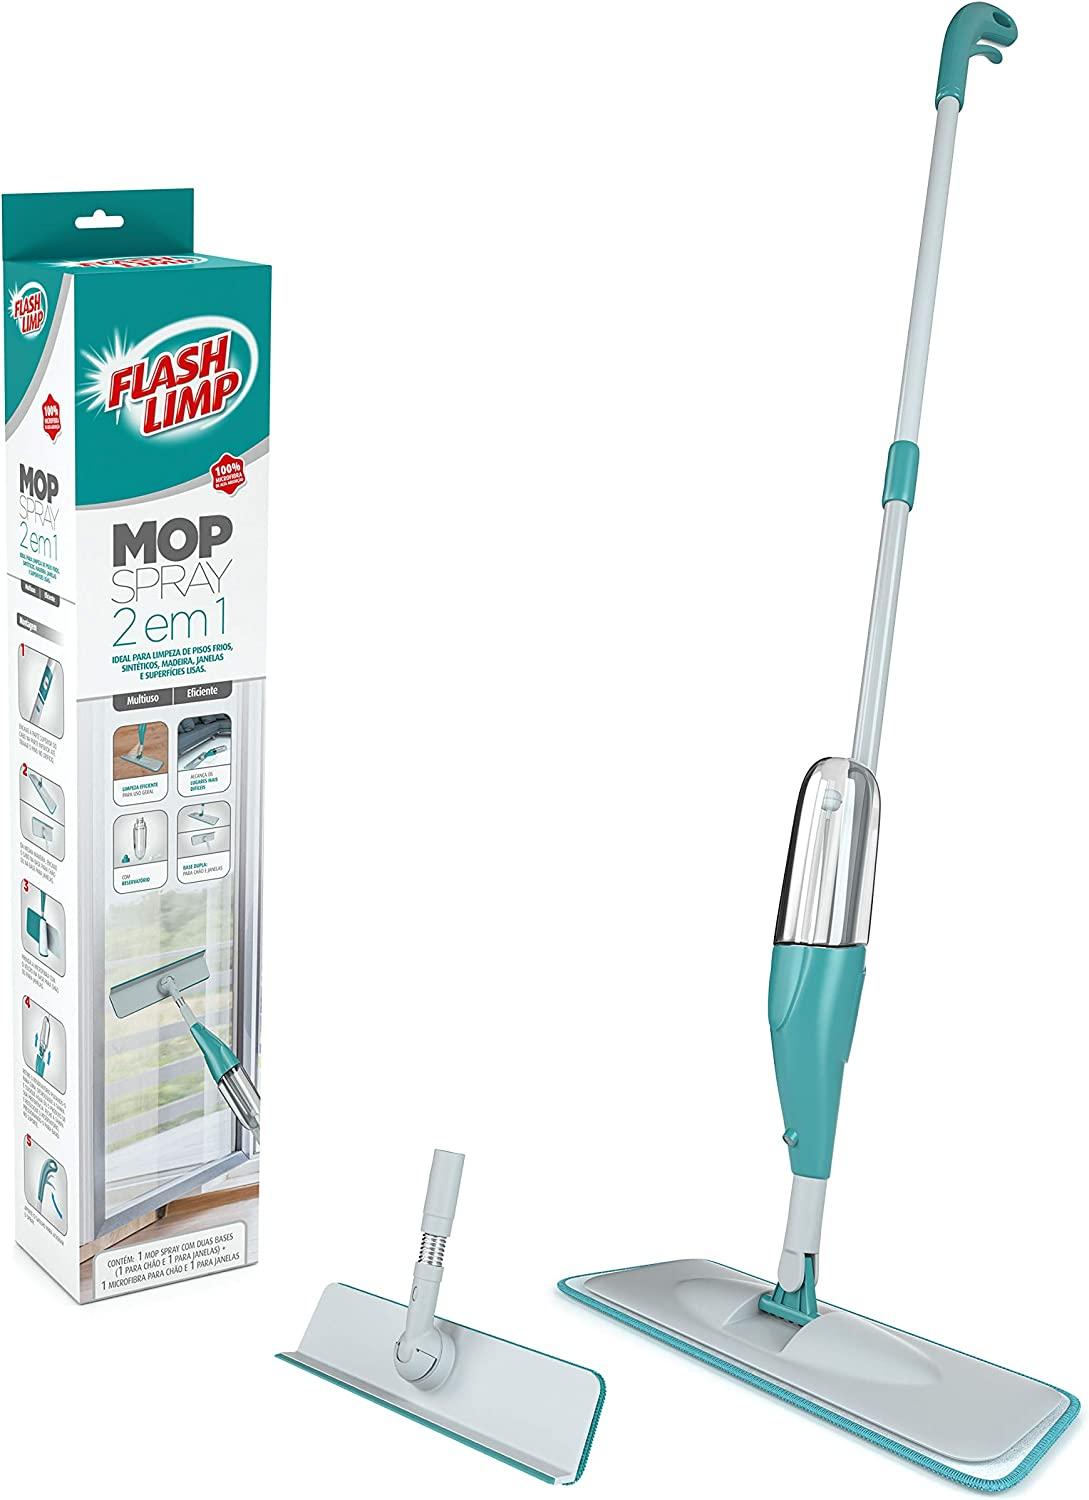 mop-spray-2-em-1-mop6064-verde-flash-limp - Imagem